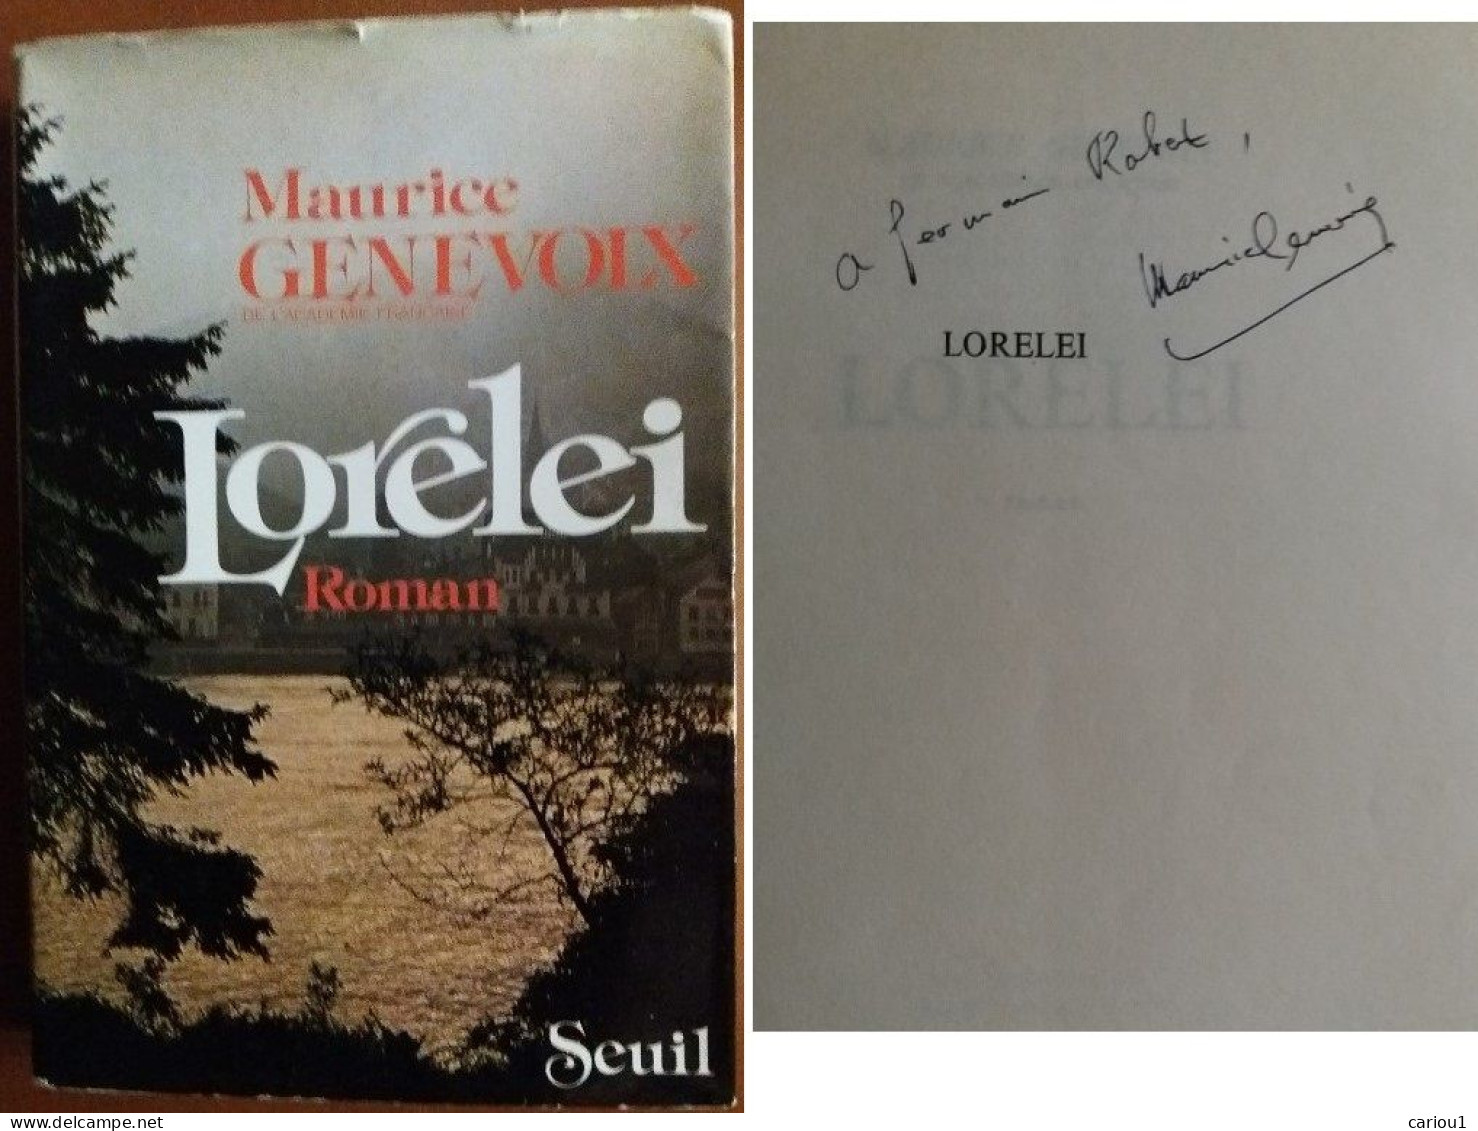 C1 Maurice GENEVOIX LORELEI 1978 Envoi DEDICACE SIGNED Allemagne OFFENBACH MAIN PORT INCLUS France - Libros Autografiados